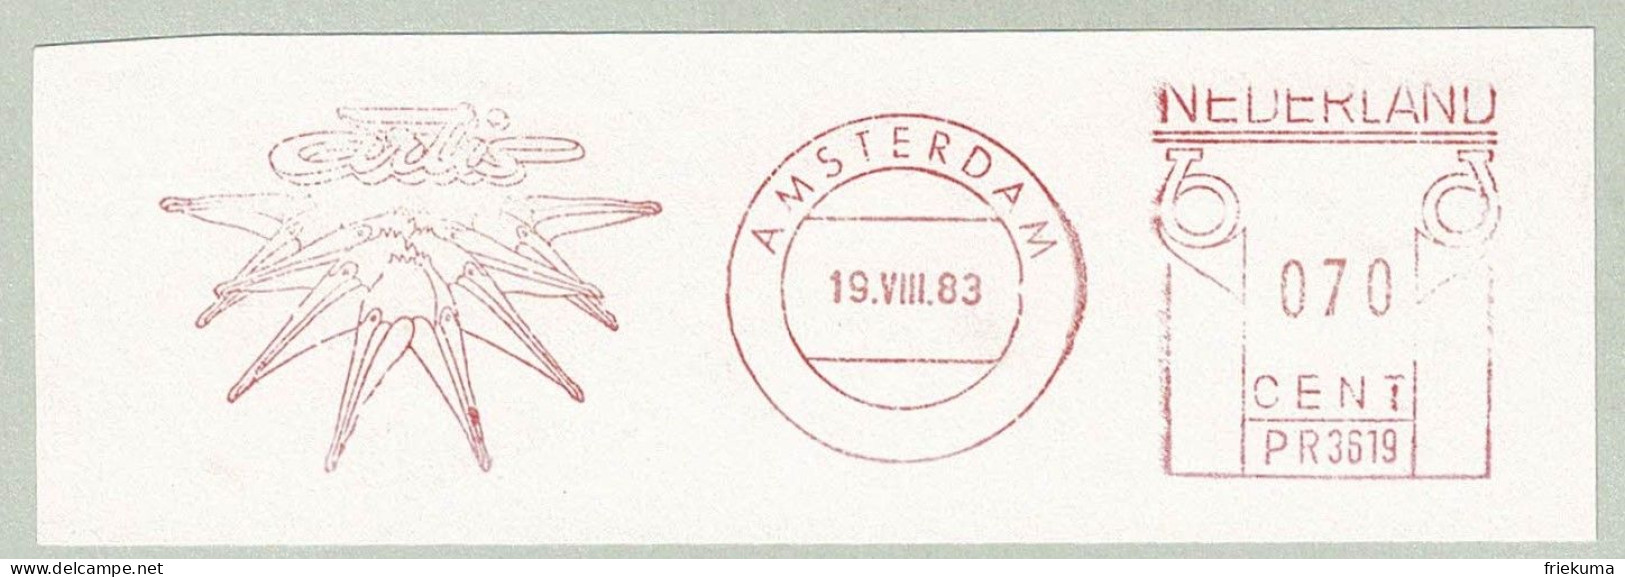 Niederlande / Nederland 1983, Freistempel / EMA / Meterstamp Amsterdam, Pelikane / Pelicans / Pelecanus - Pelikanen